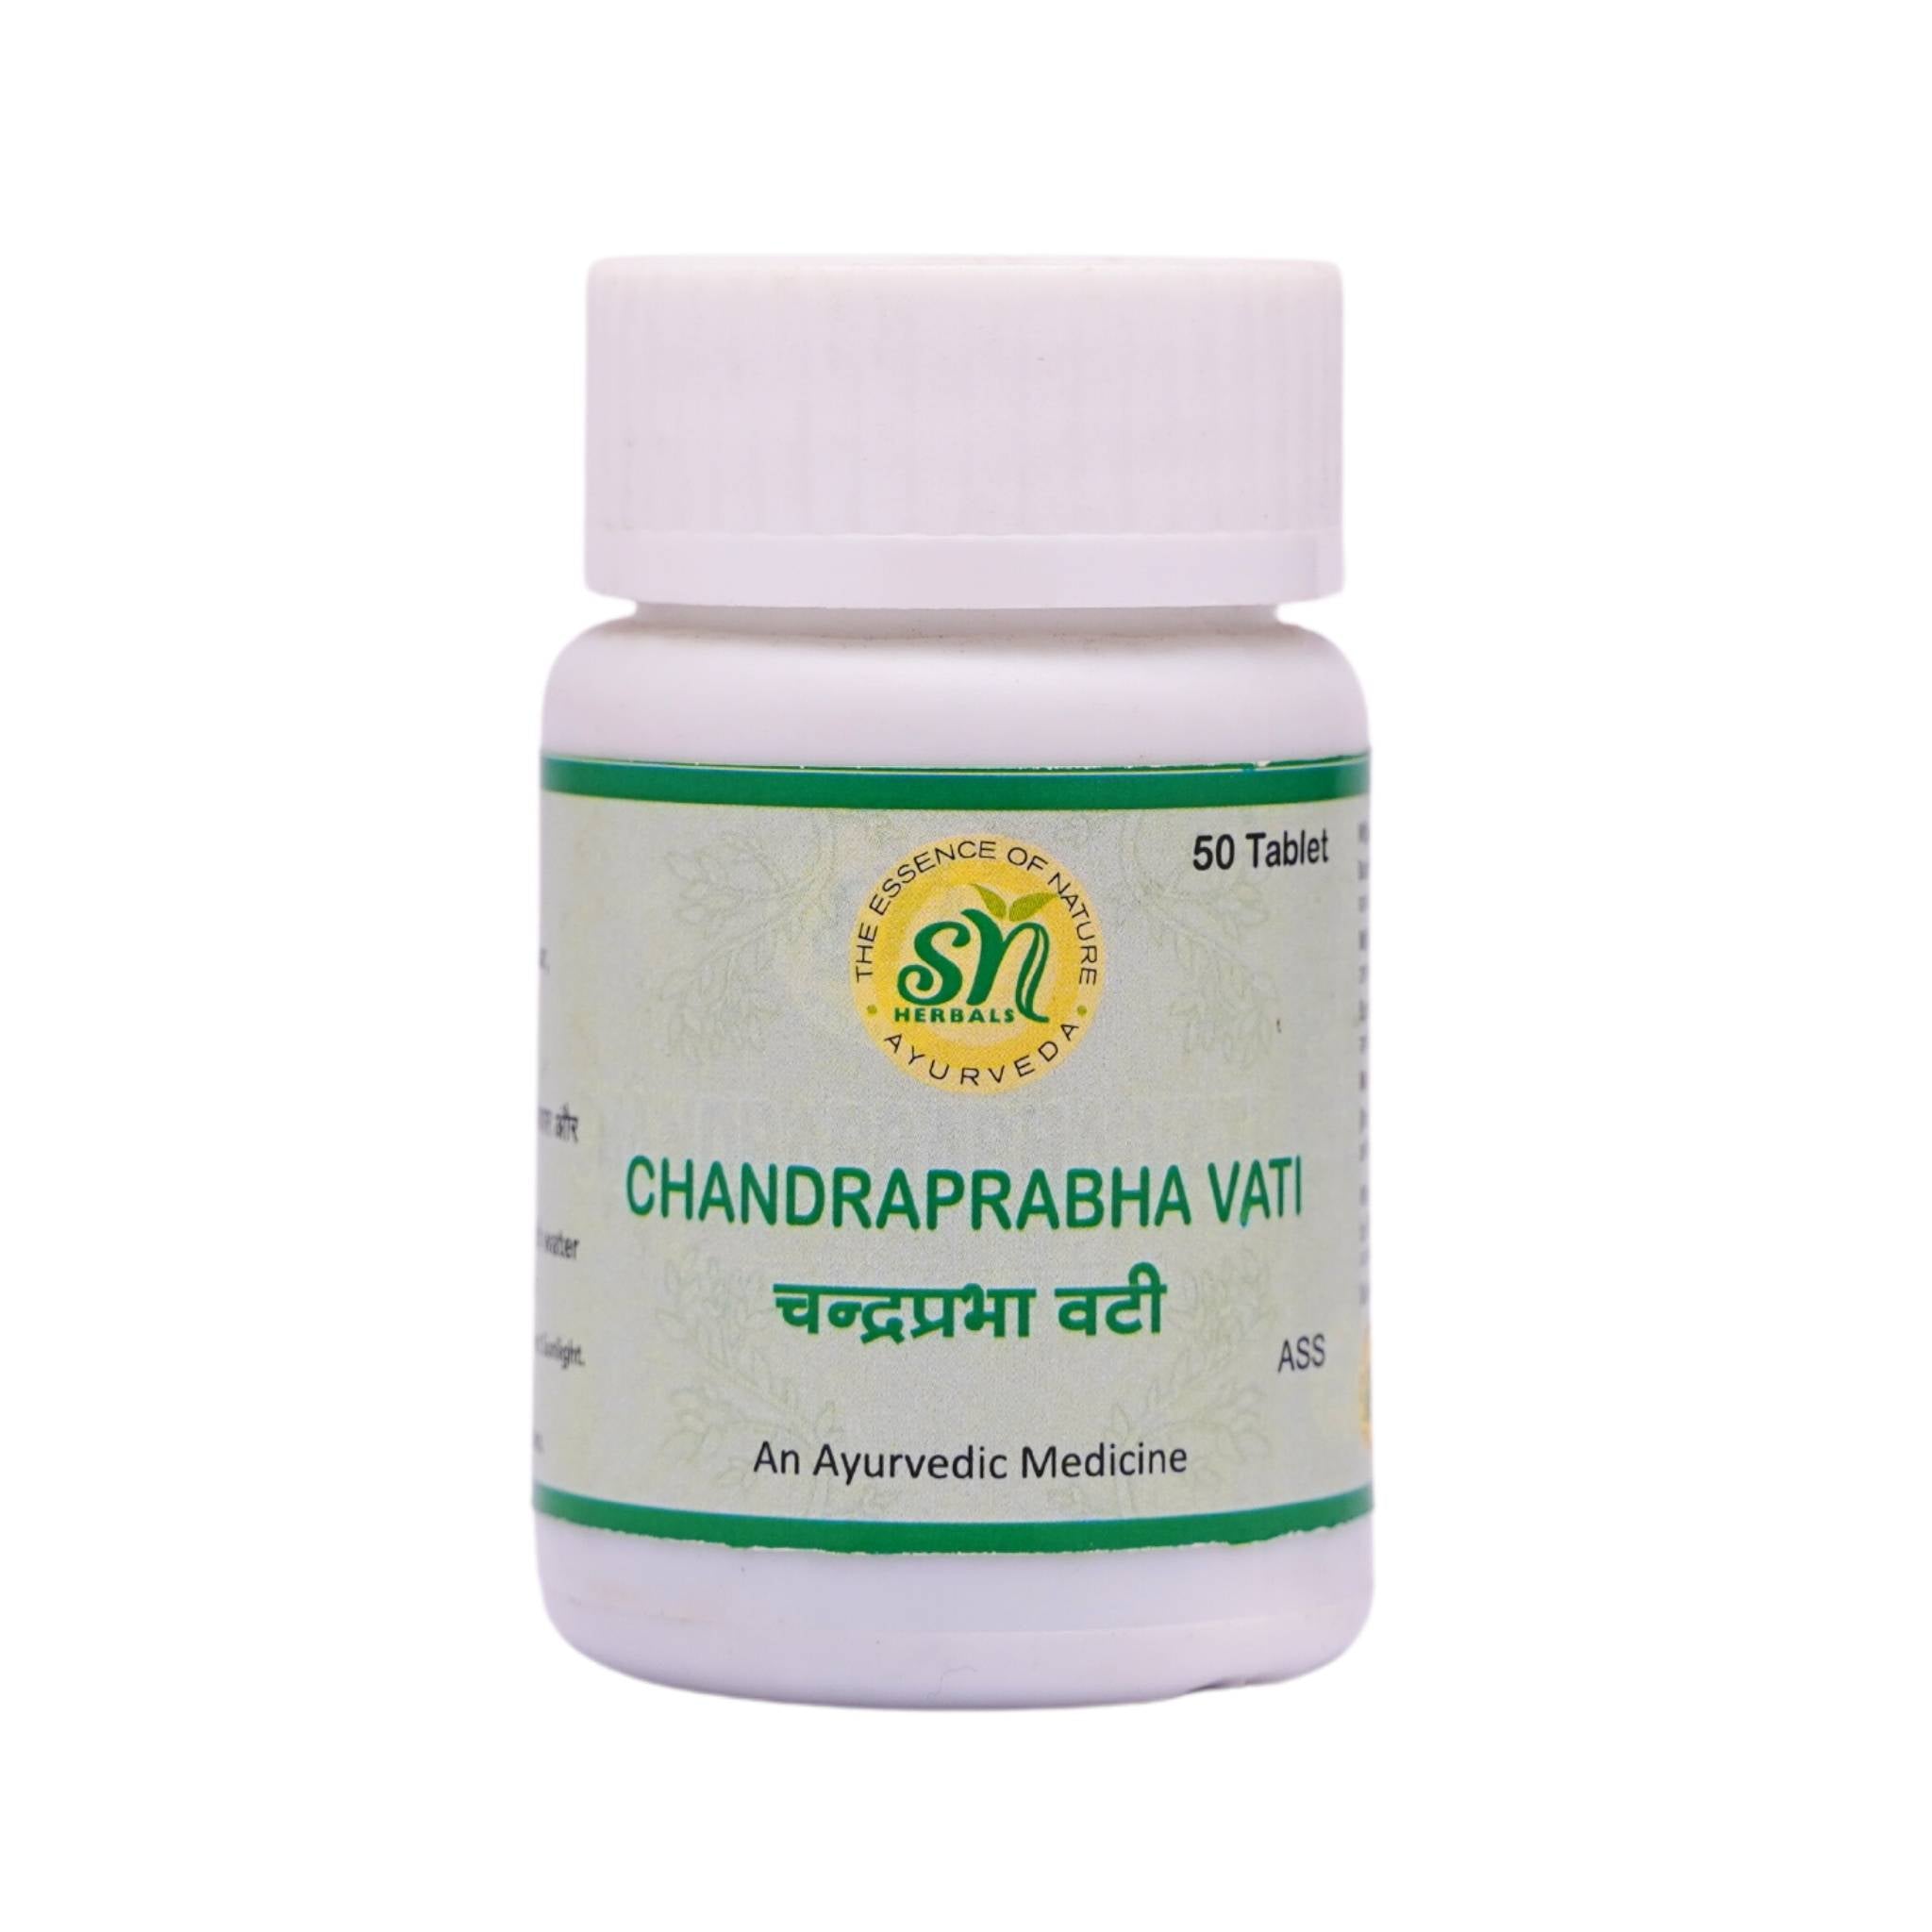 CHANDRAPRABHA VATI Bottle of  50 QTY